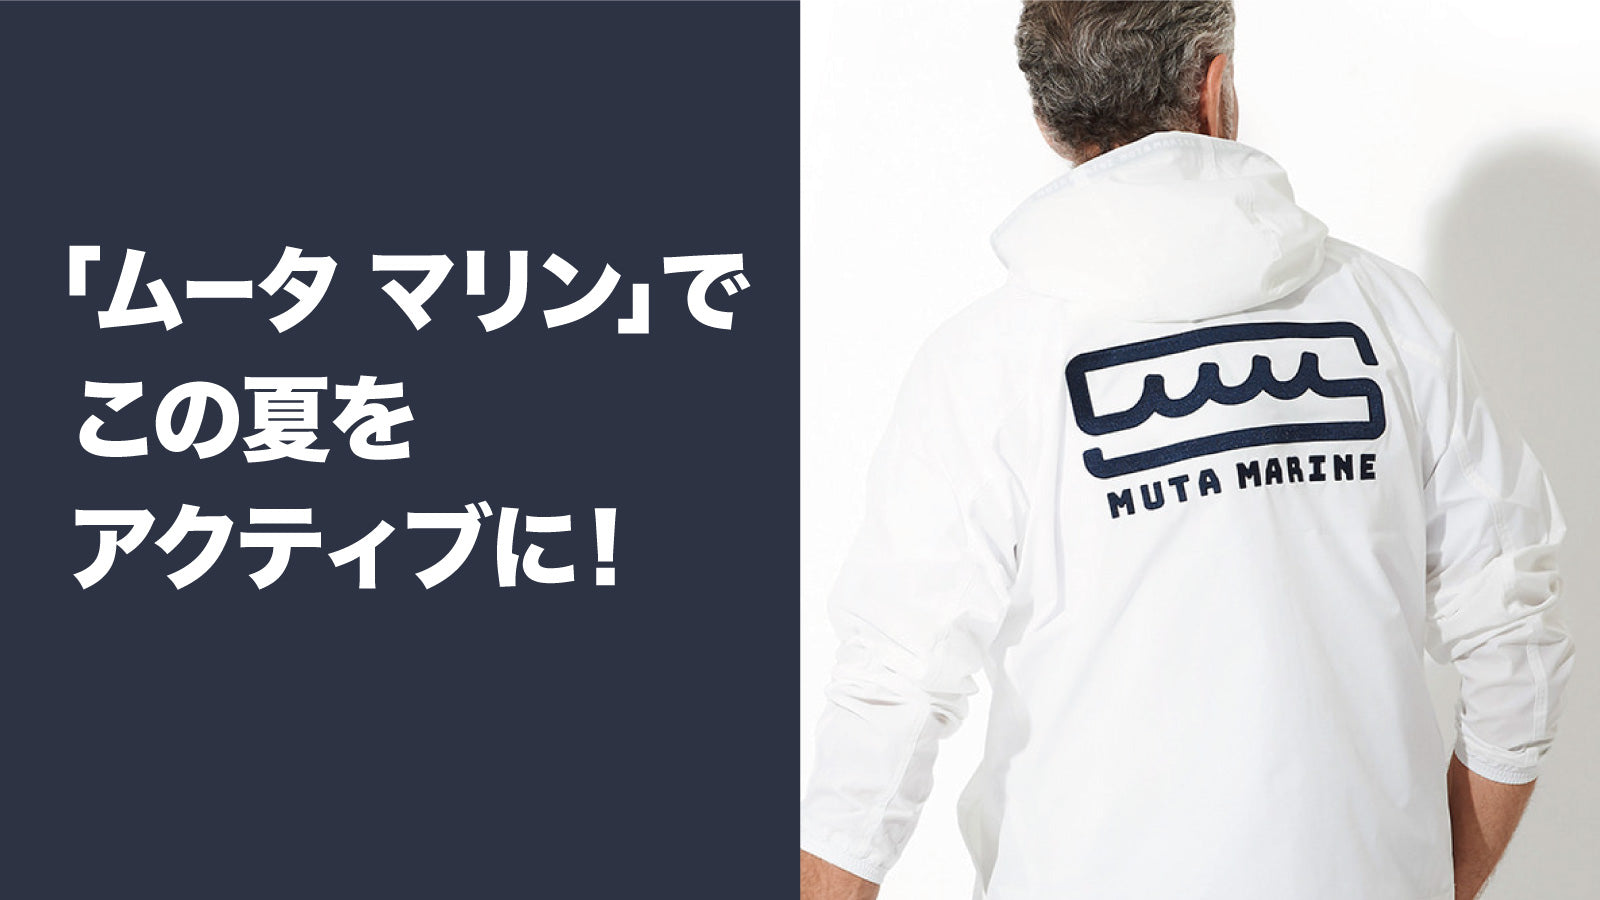 Be active this summer with “Muta Marine”! – 買えるLEON